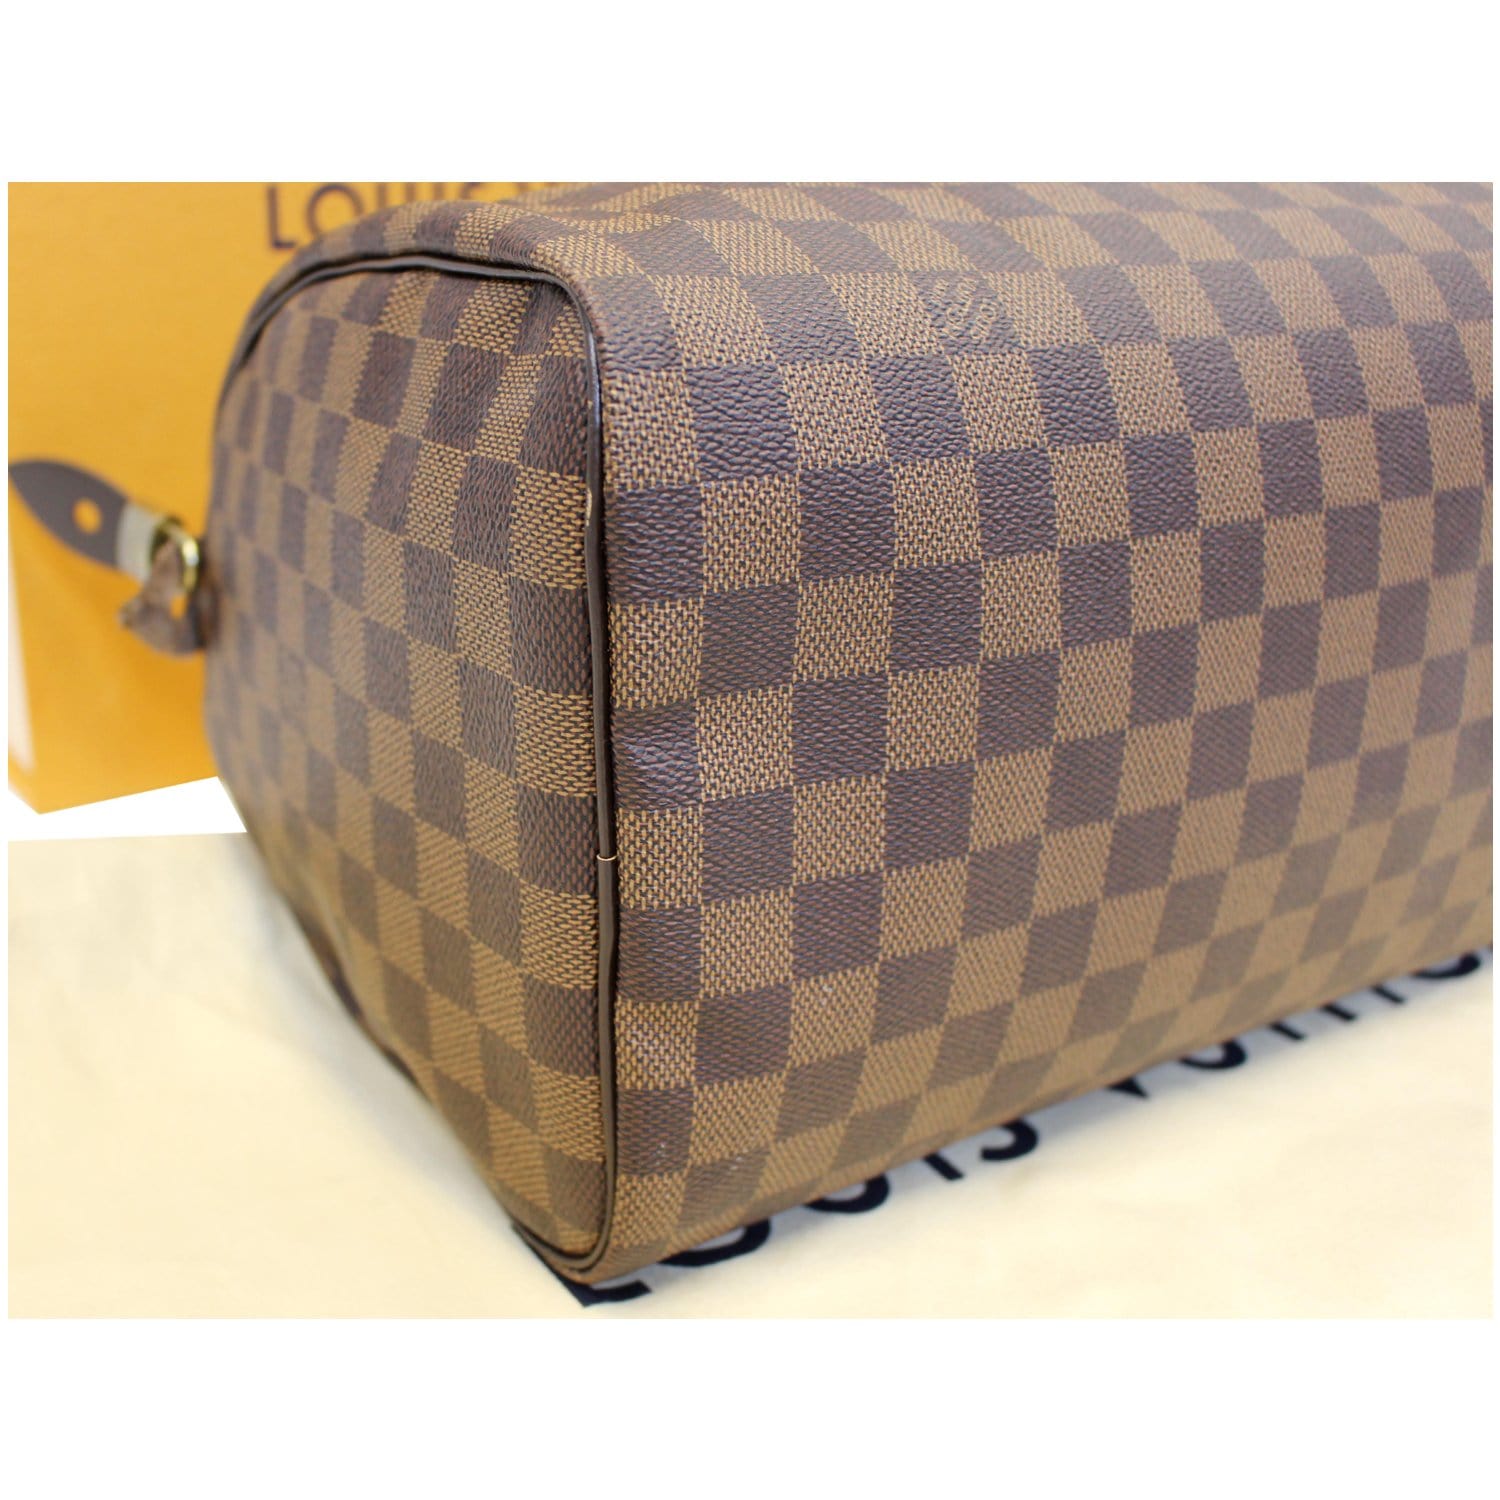 Speedy leather handbag Louis Vuitton Brown in Leather - 36236762